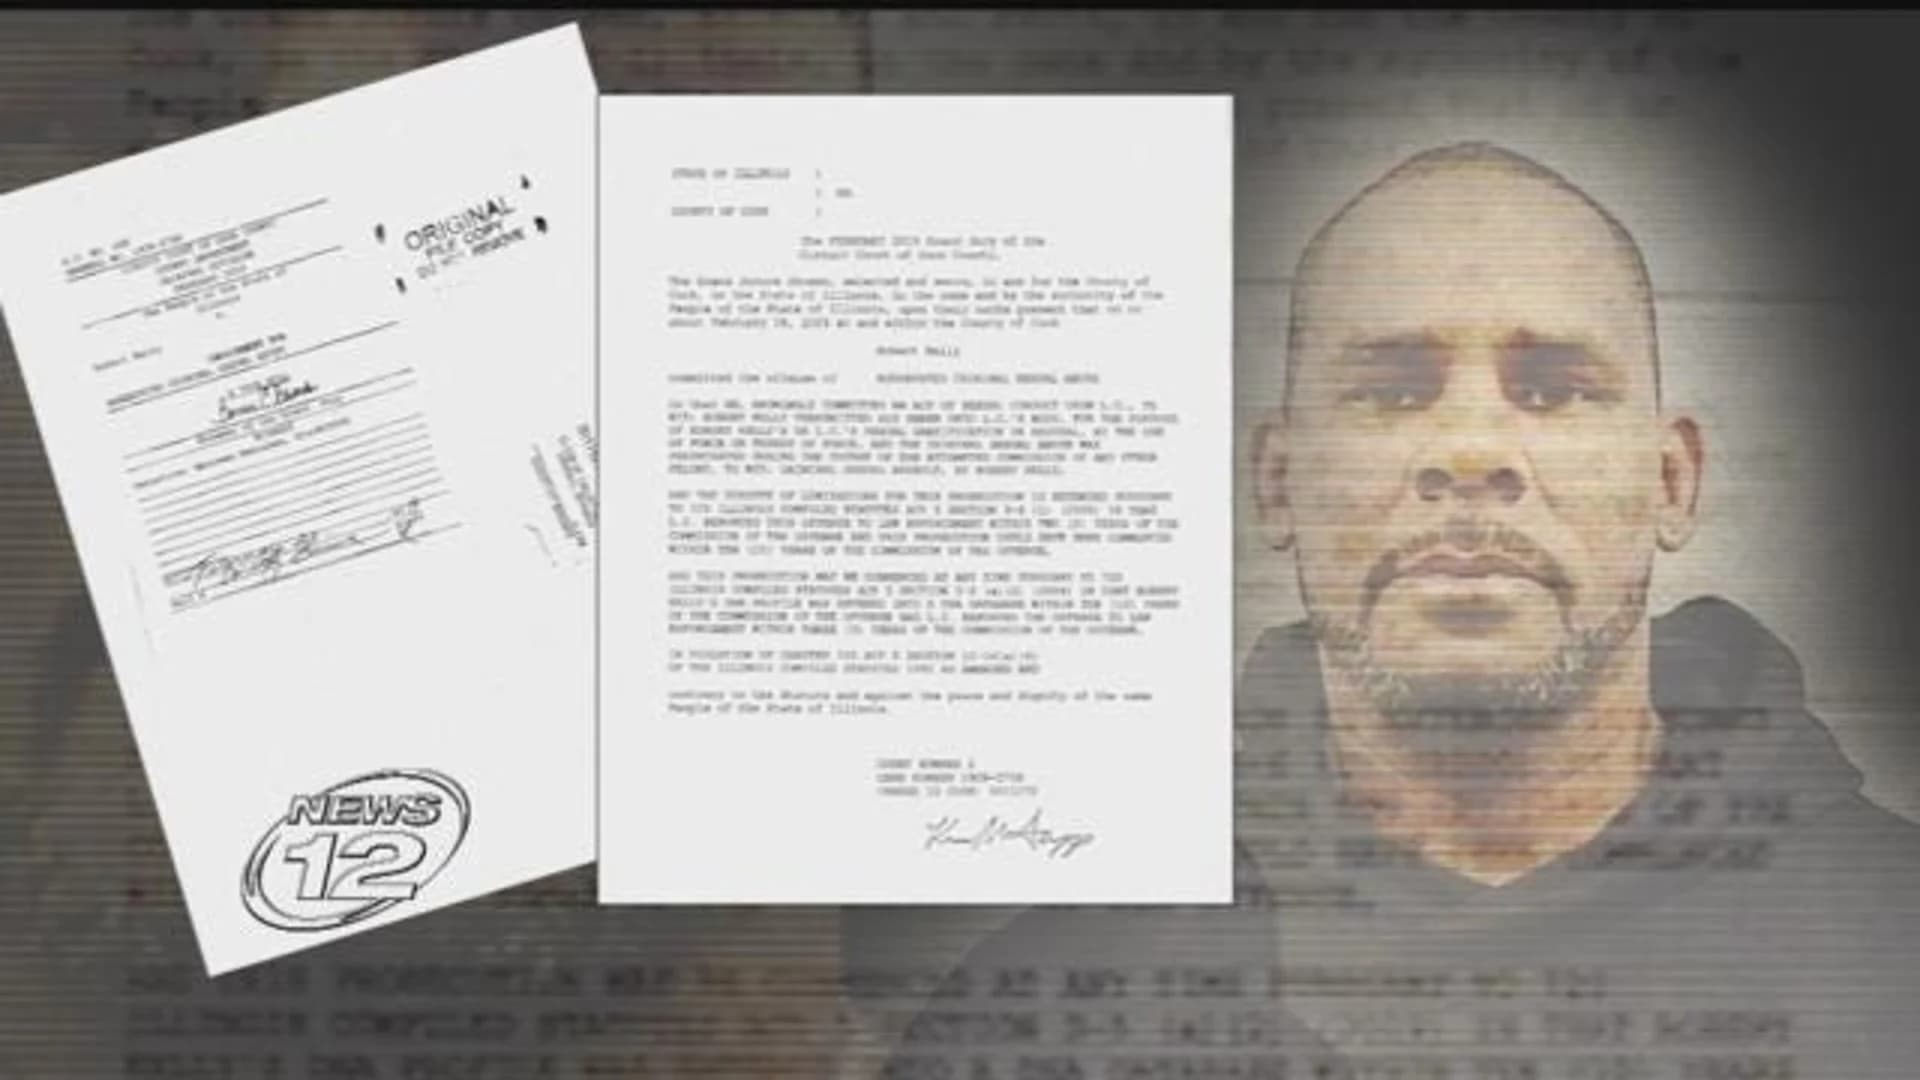 R. Kelly leaves jail after posting $100K in sex abuse case